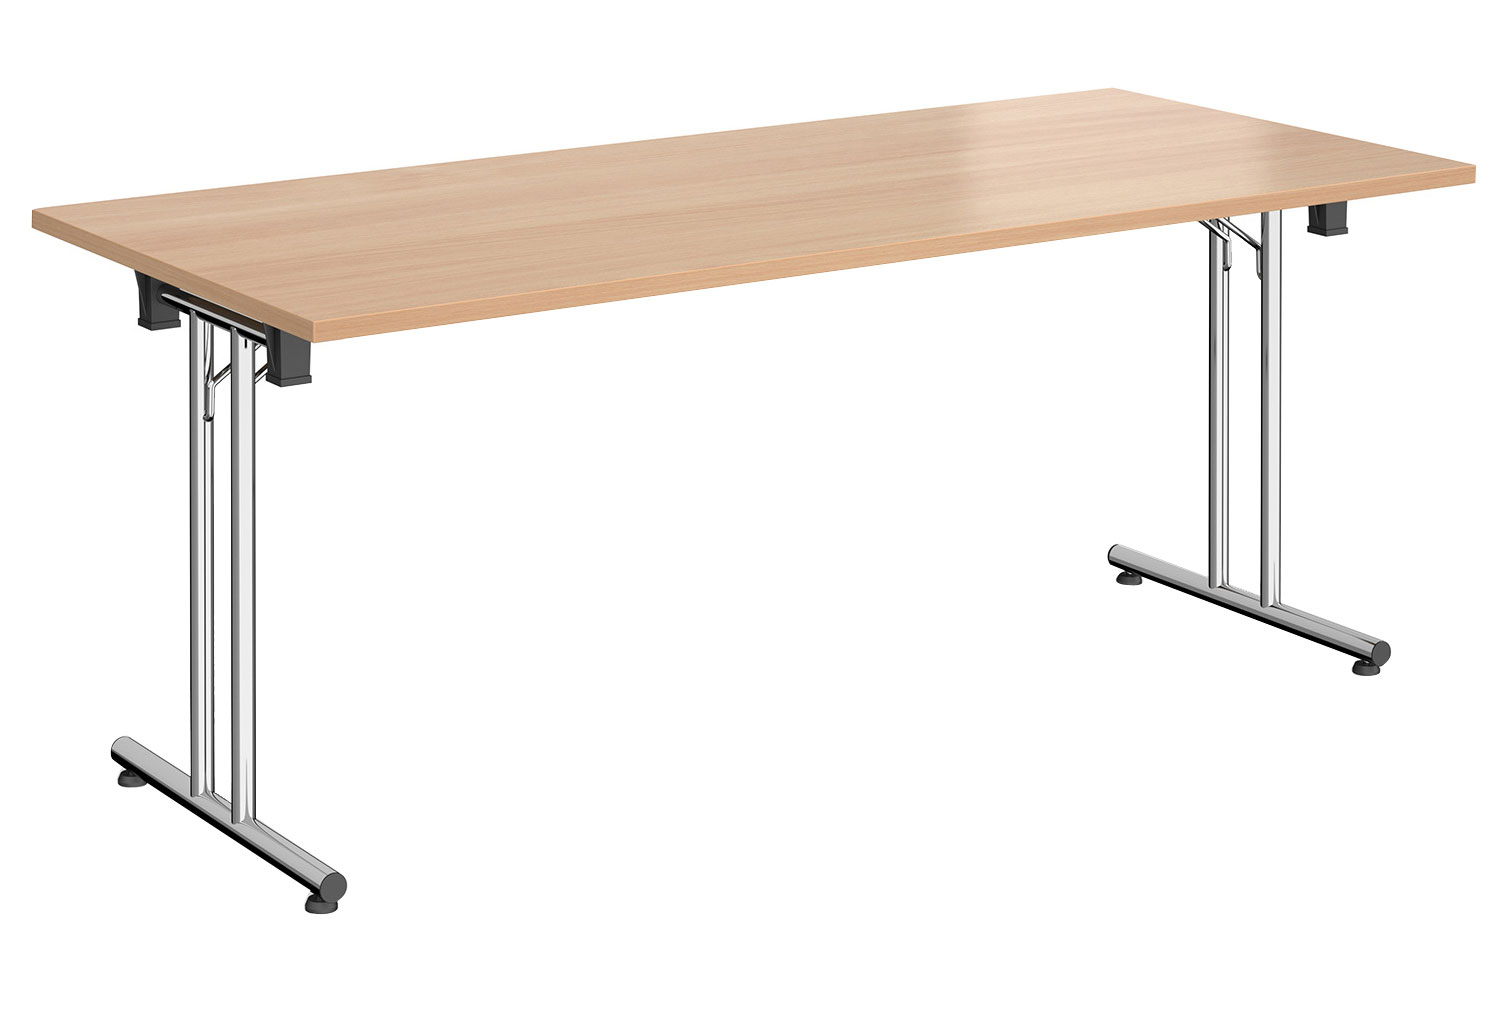 Adson Rectangular Folding Table